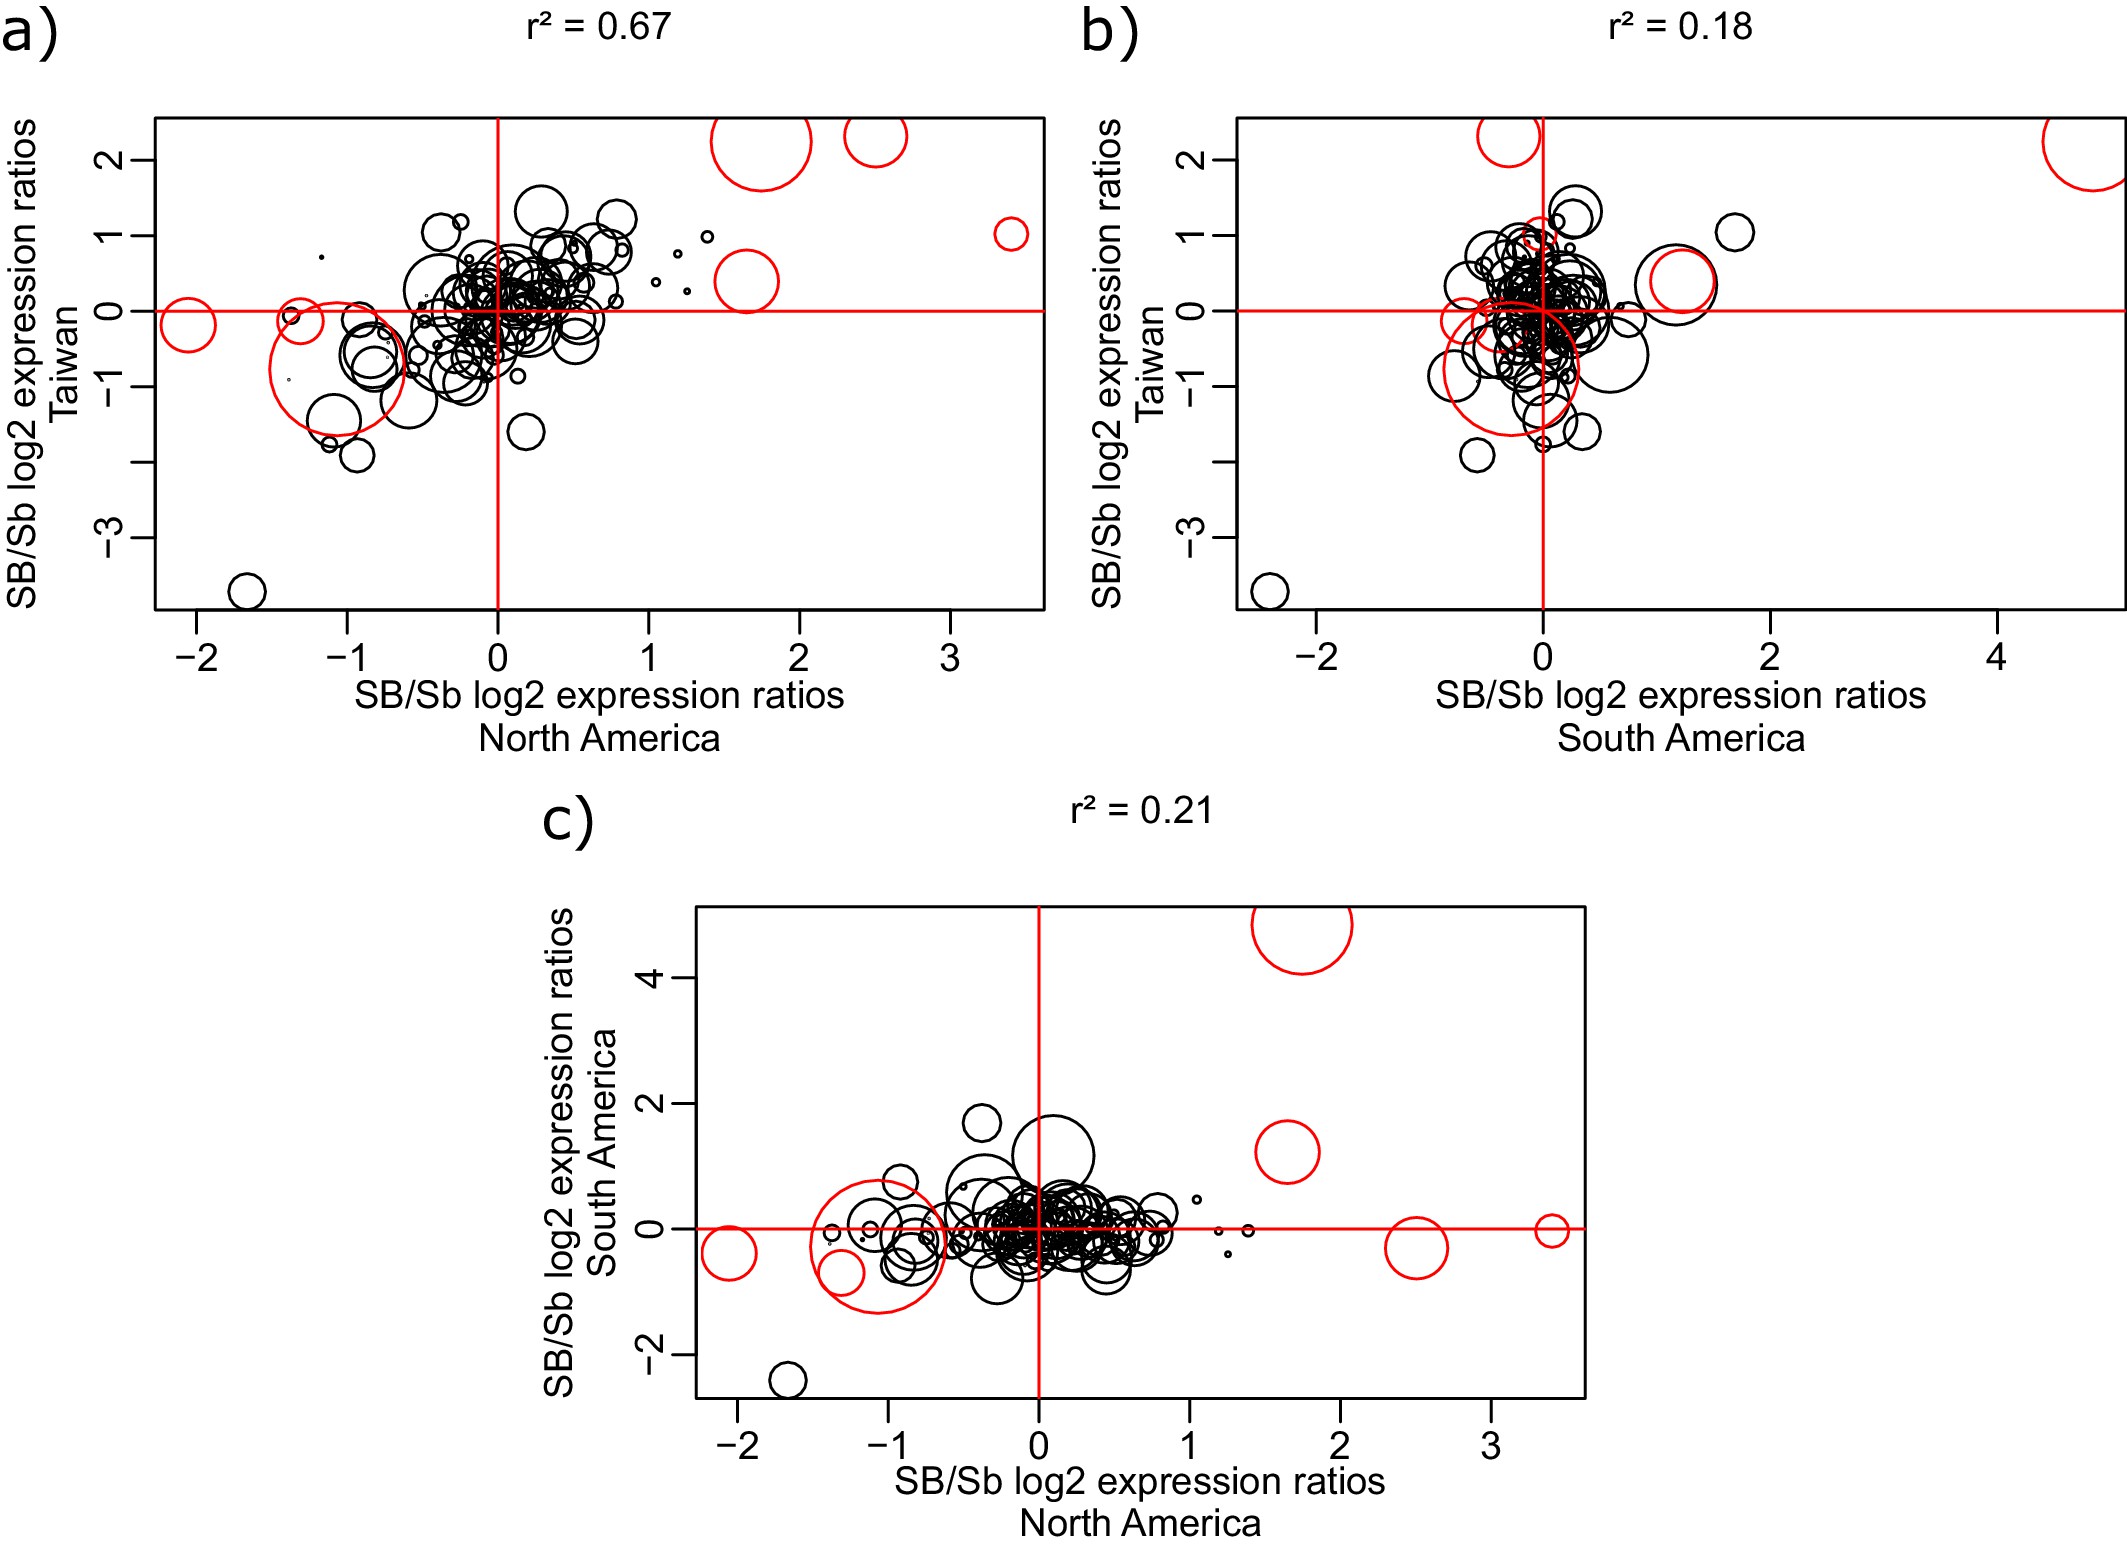 Distribution of socially biased genes